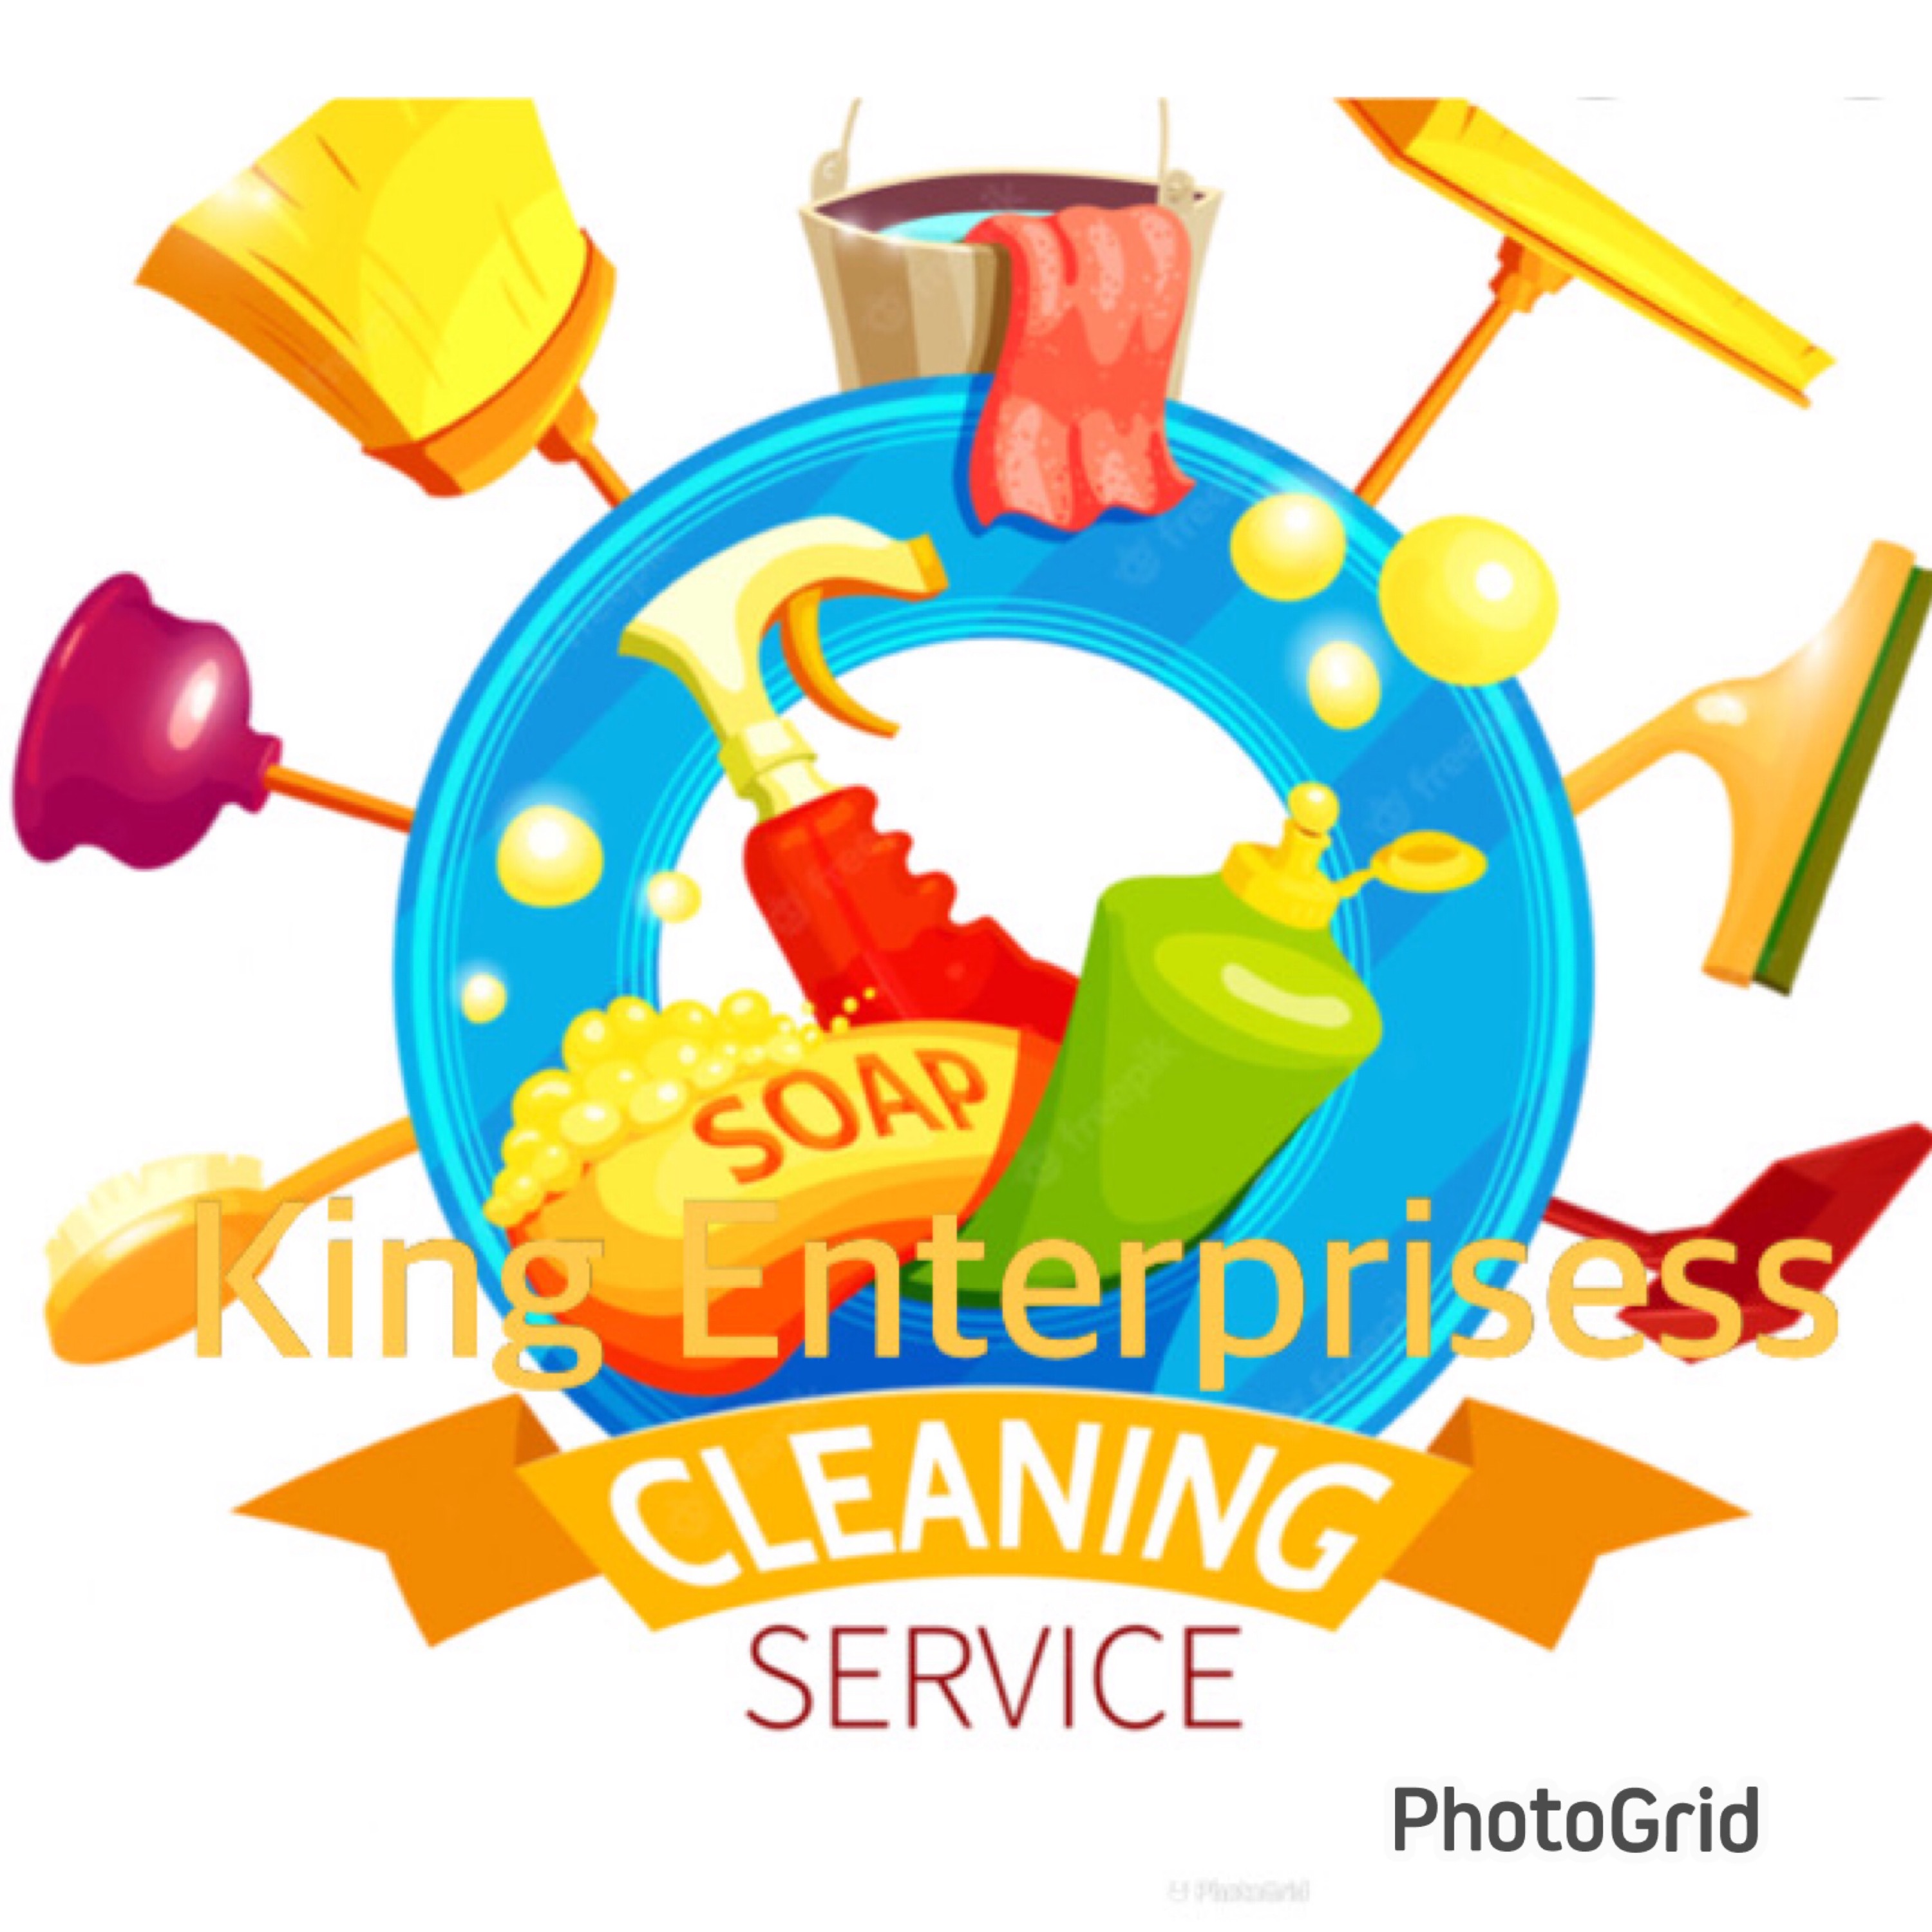 King Enterprisess Logo